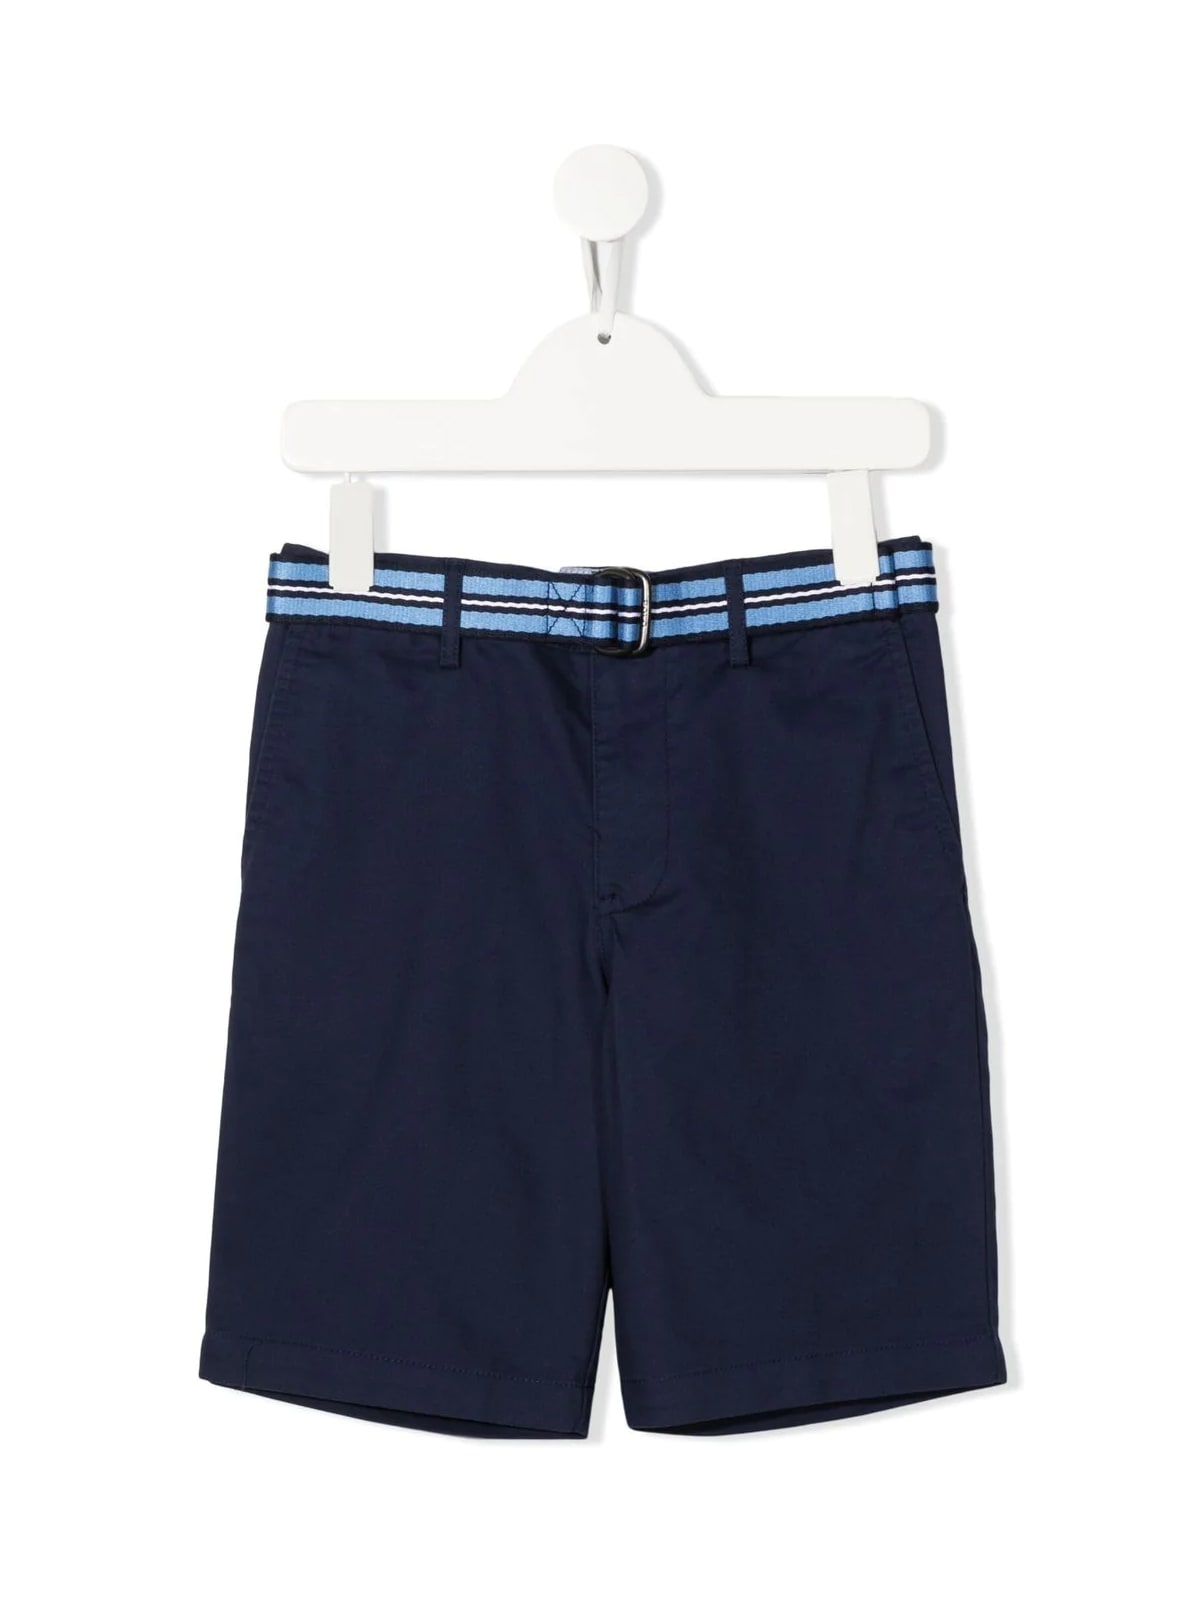 Polo Ralph Lauren Polo Rl Kids Flat Front Shorts